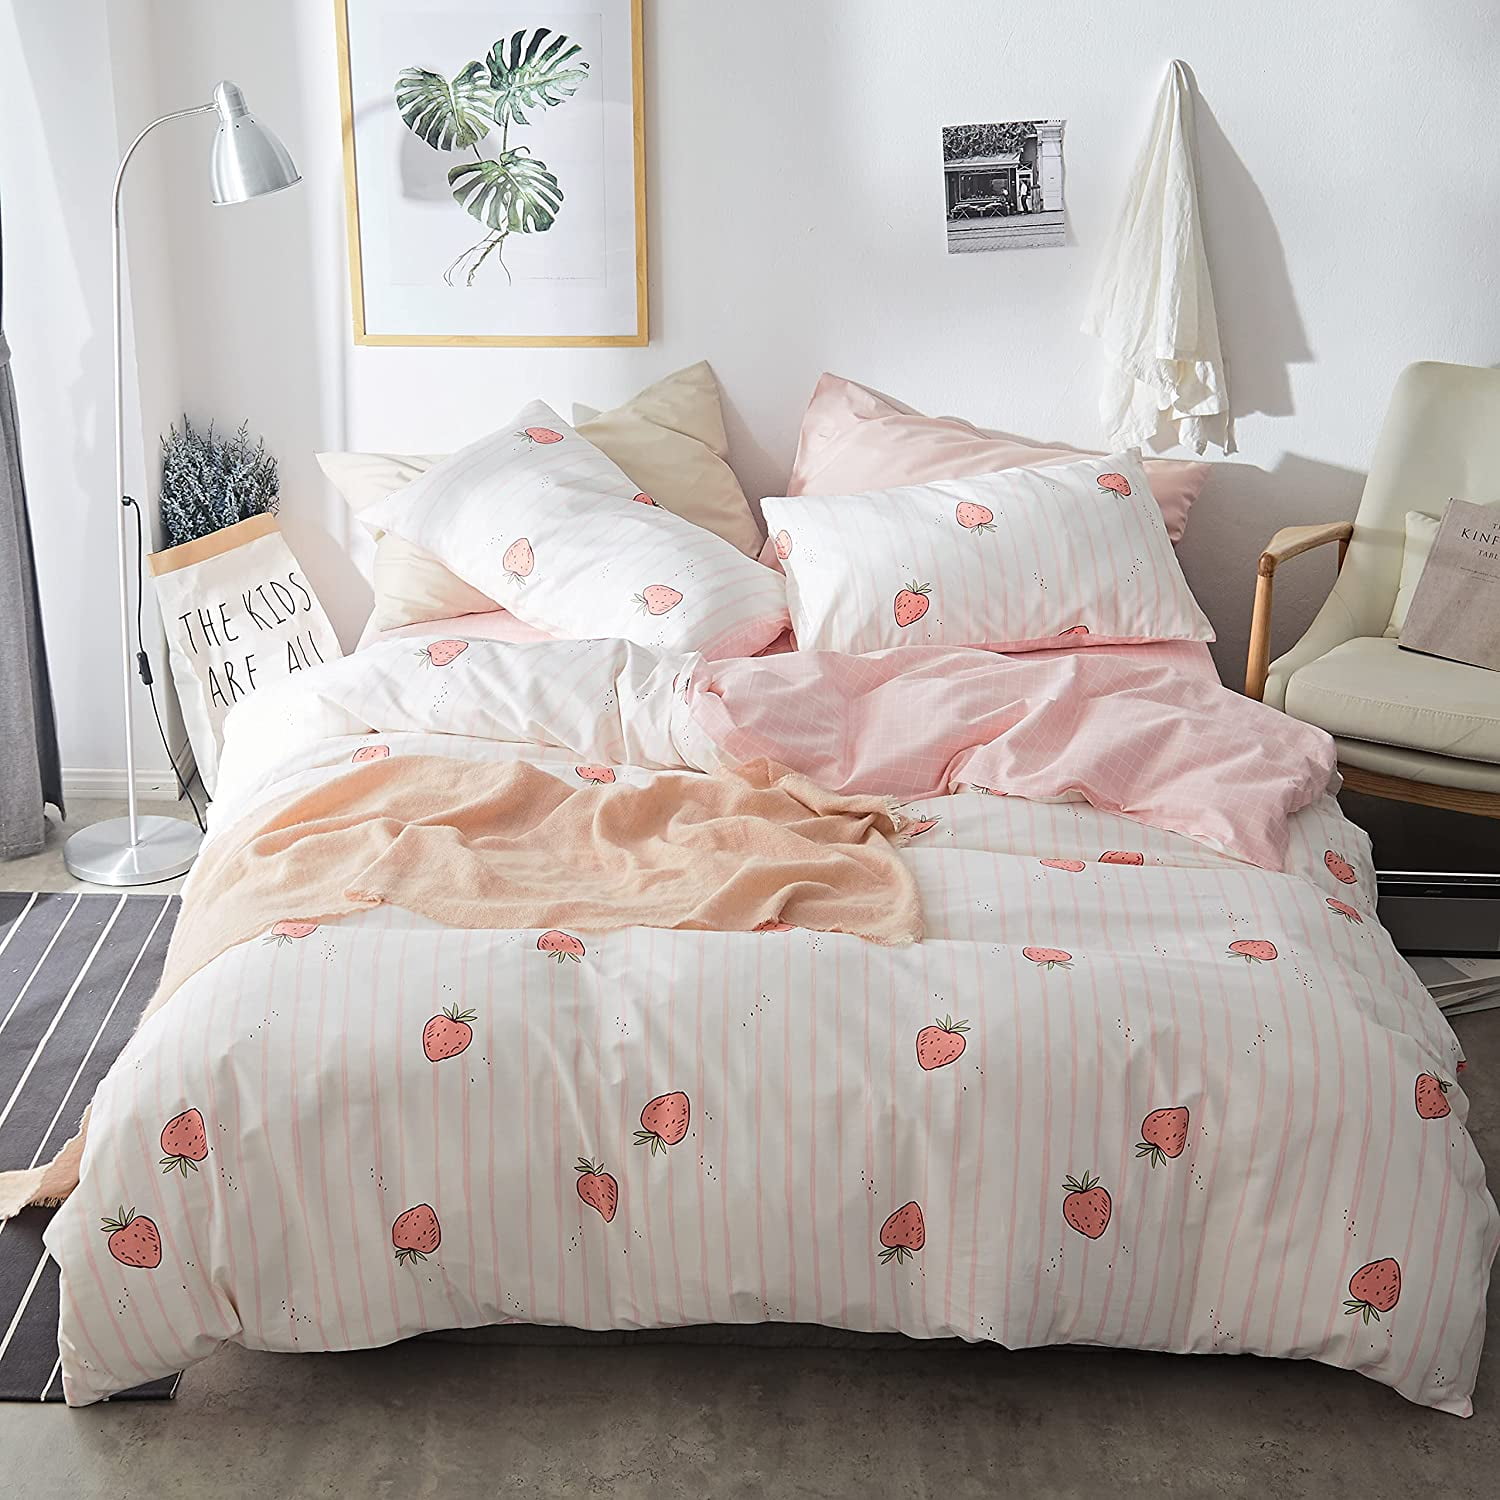 AiMay 100% Natural Cotton 3 Piece Comforter Sets Super Soft Comfy Breathable Fad 